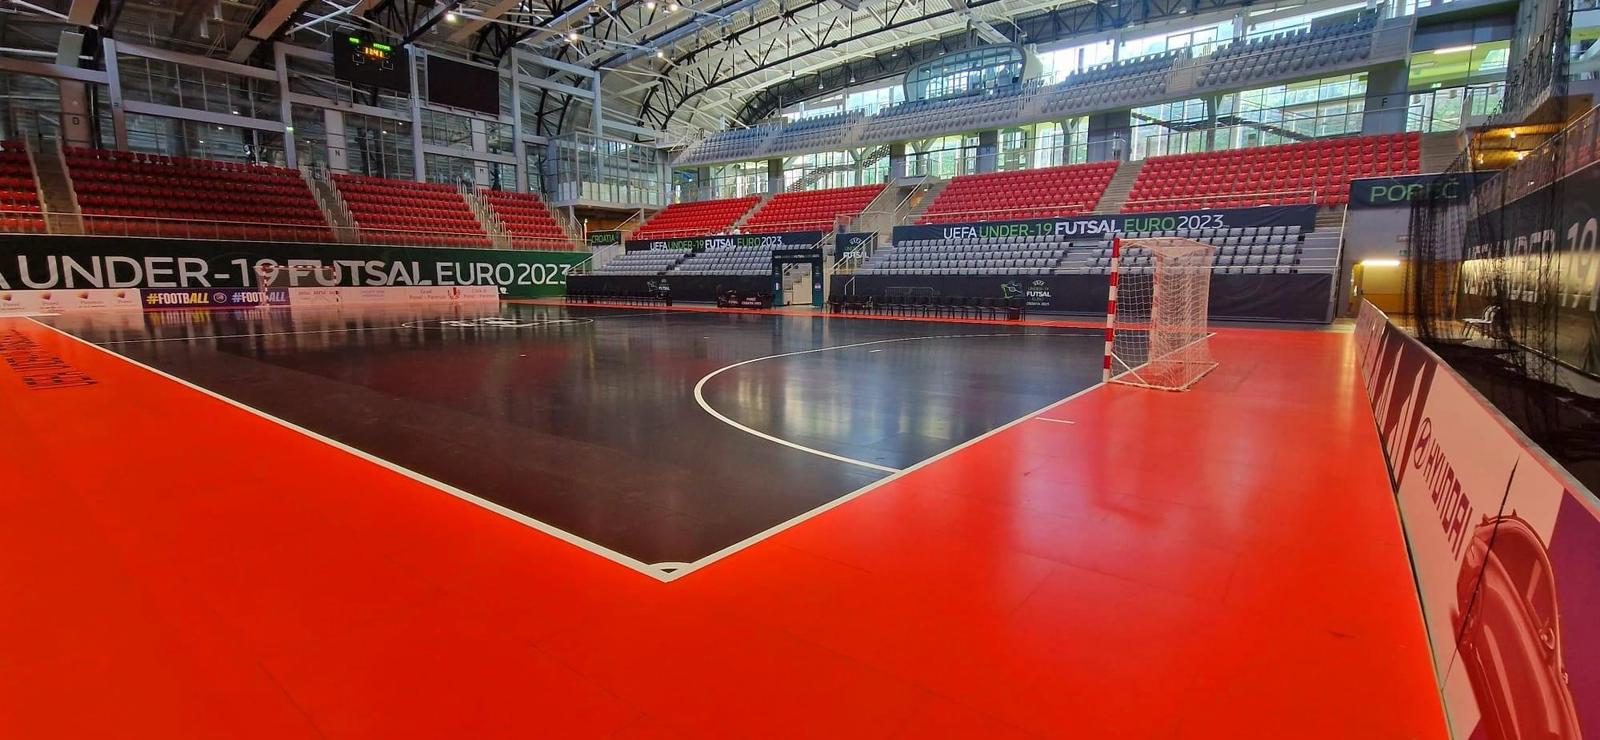 UEFA Under-19 Futsal EURO: Exciting Fixtures Await as Tournament Begins in Croatia